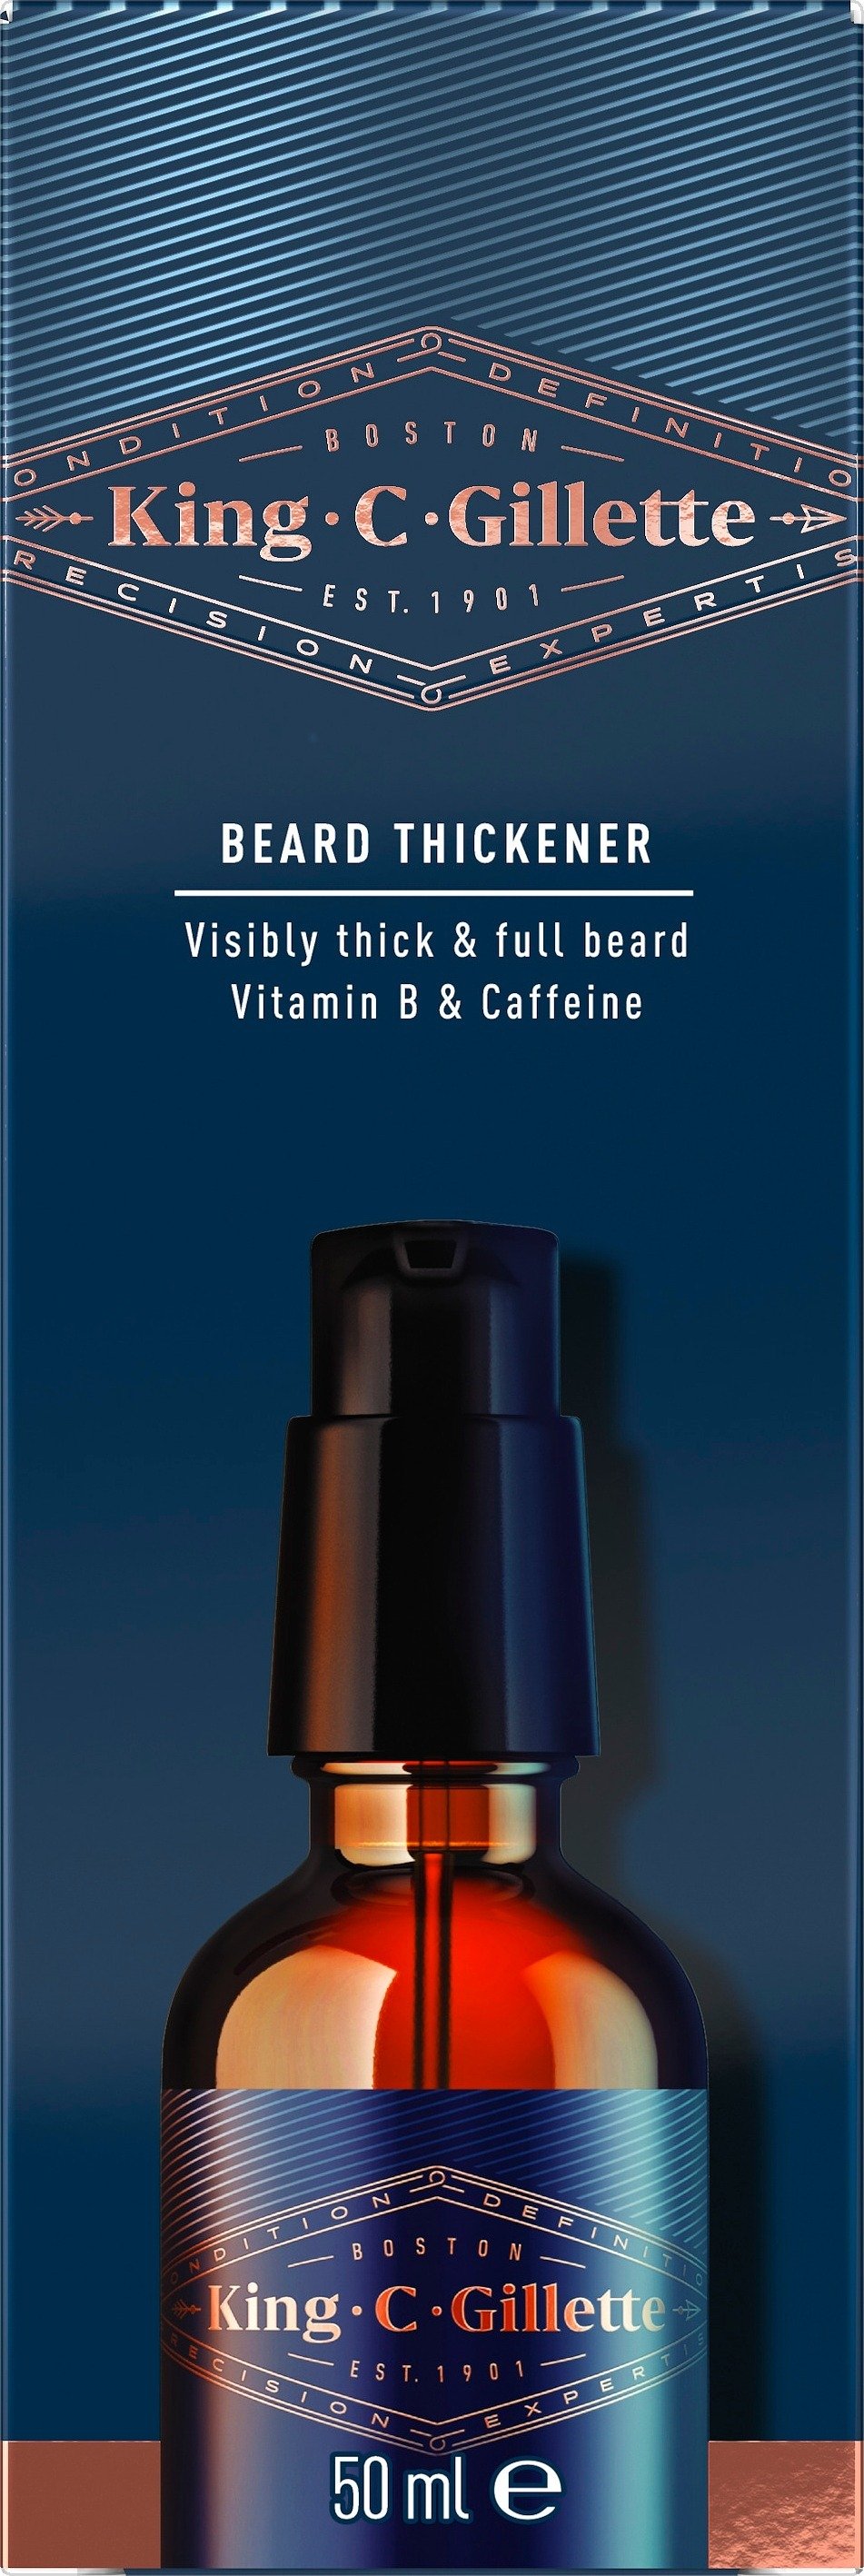 Gillette King C Gillette Beard Thickener Serum 50 ml